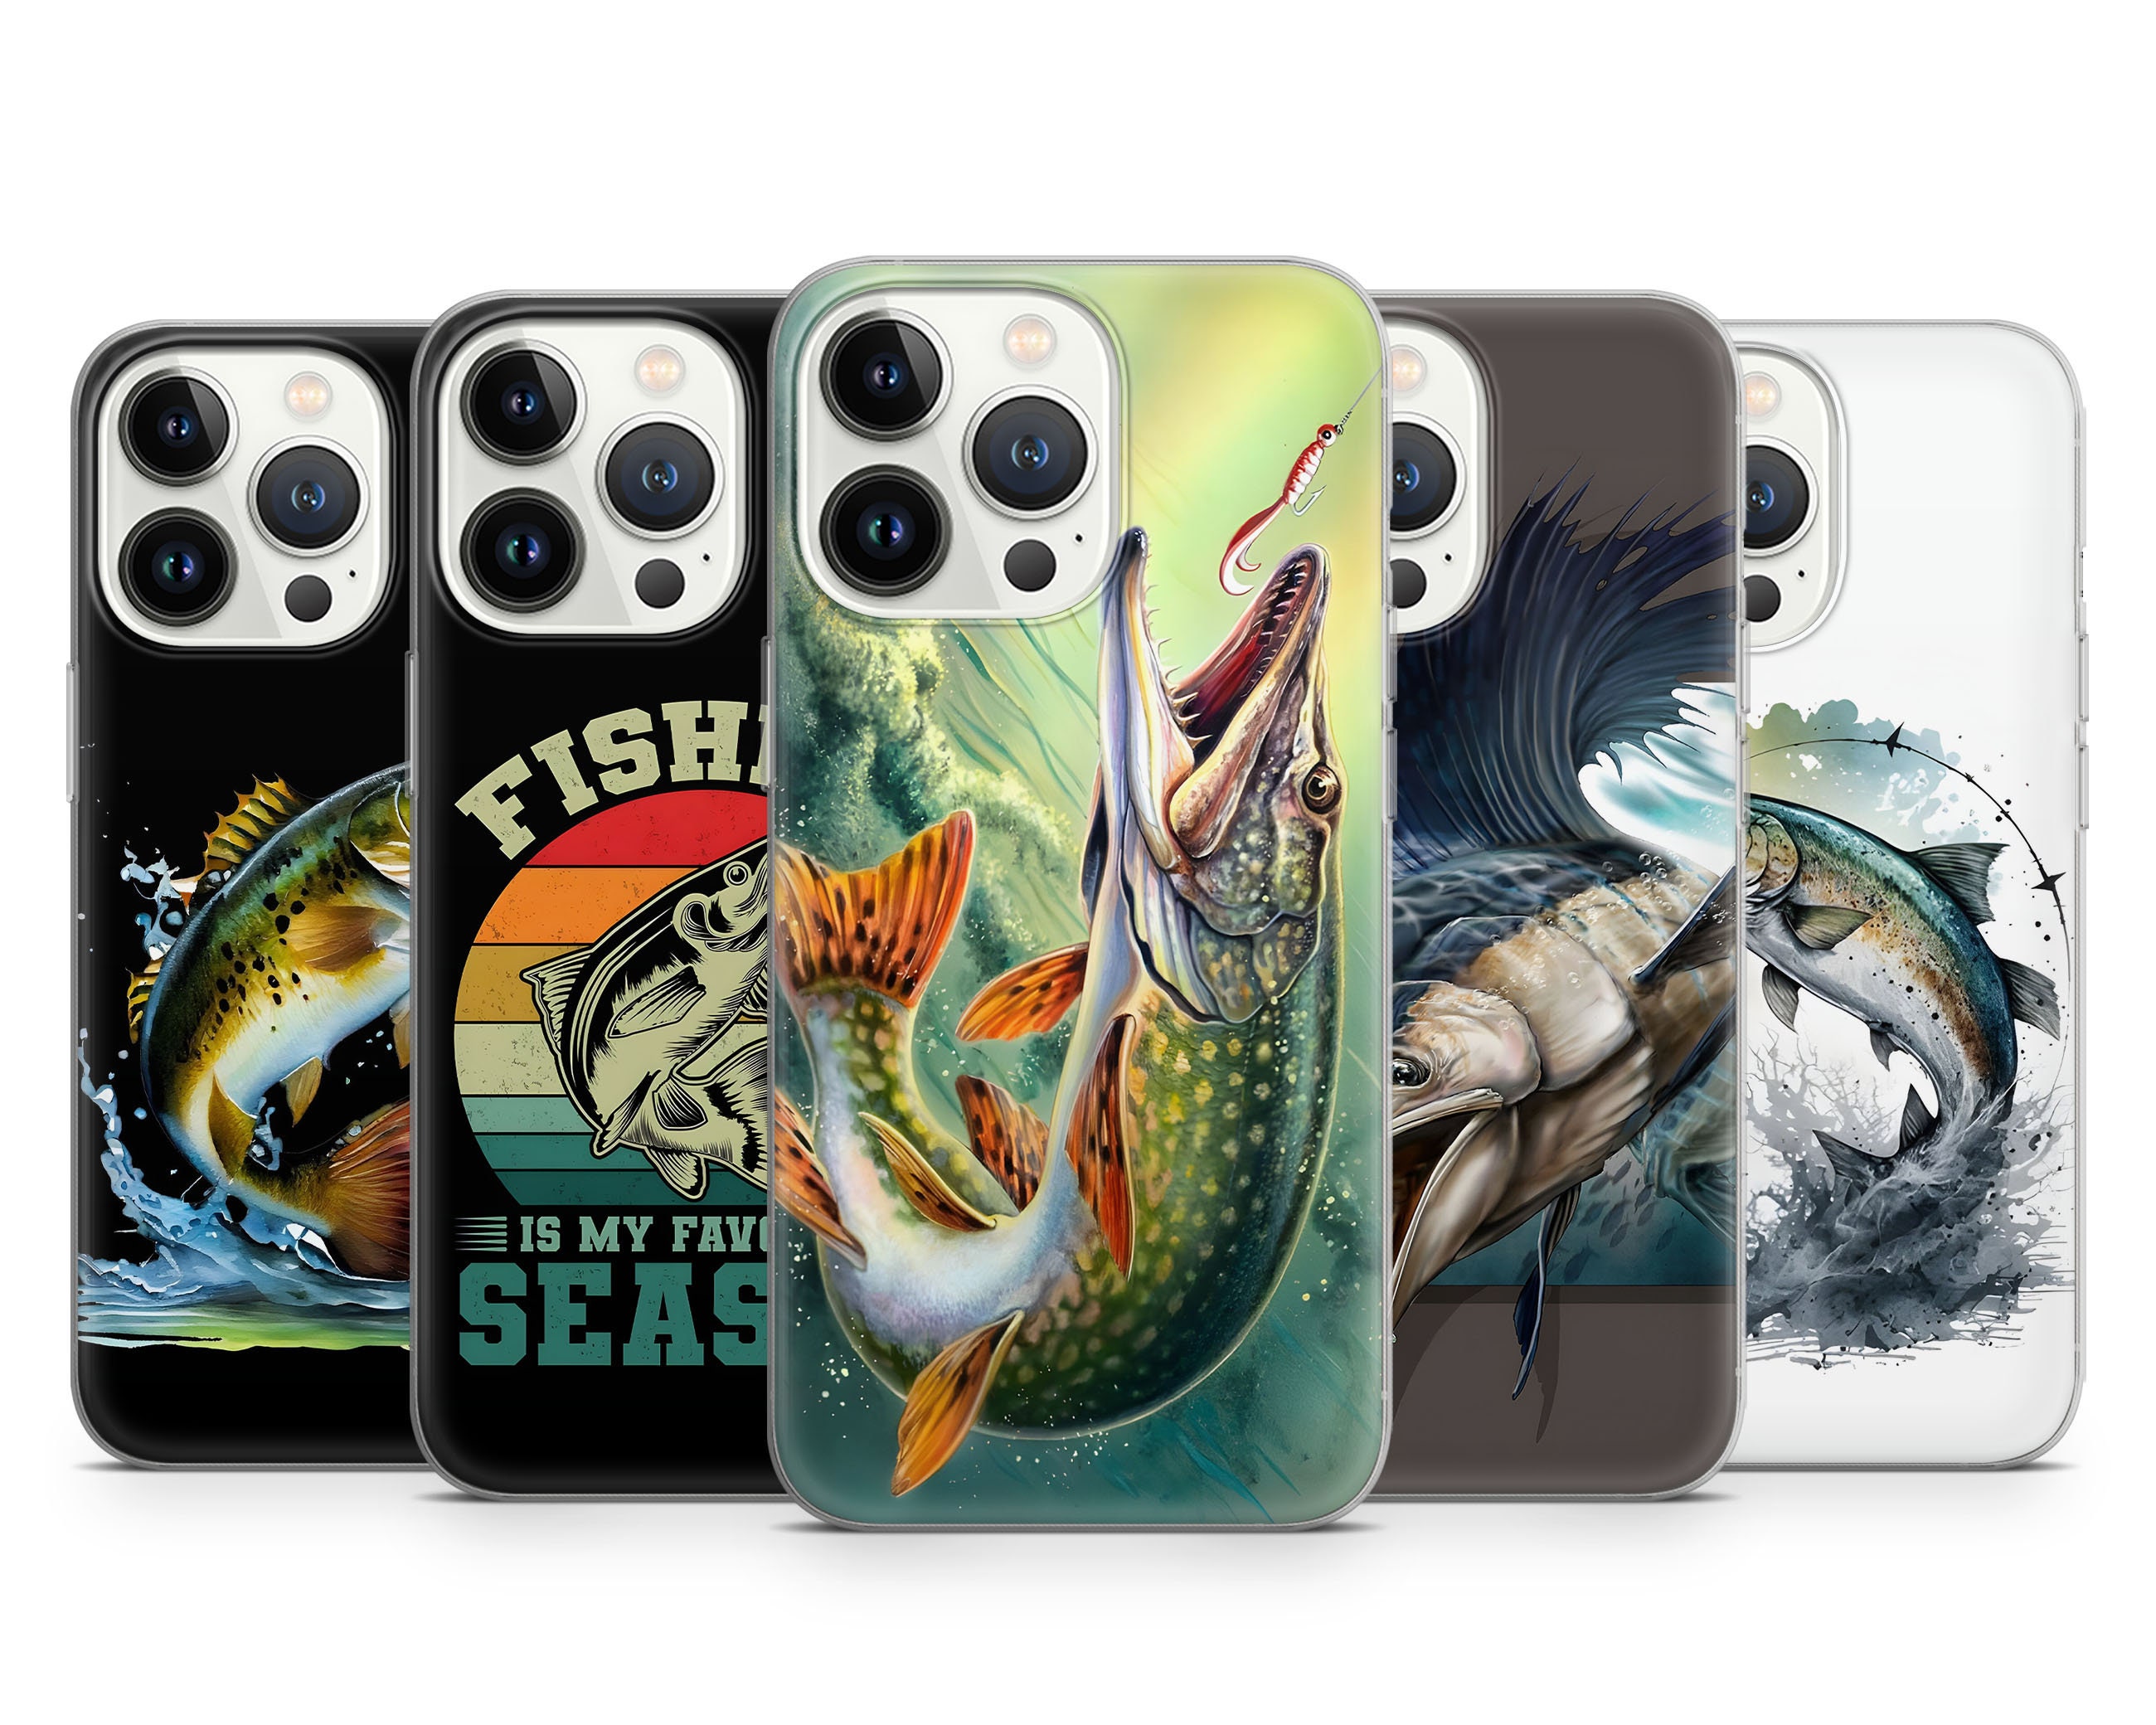 Fishing iPhone Case -  Canada